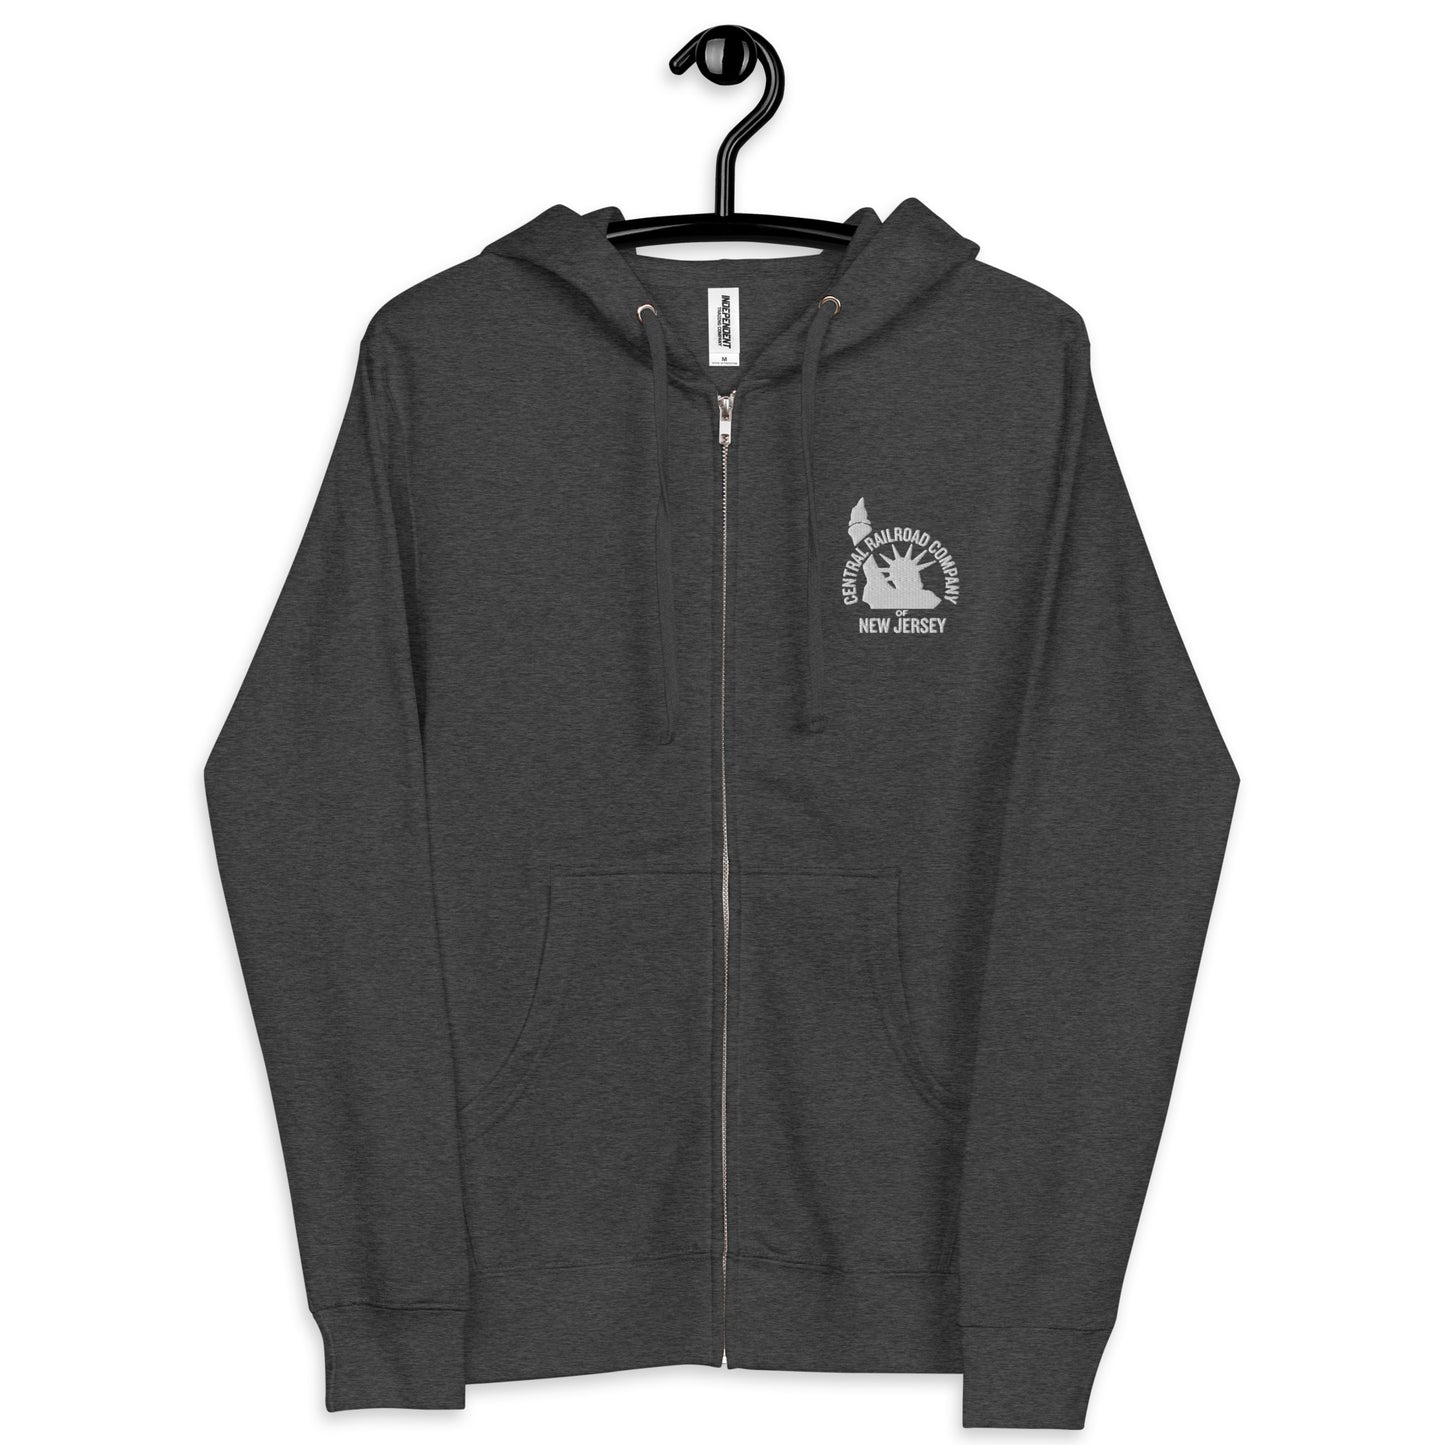 Central Railroad Company of New Jersey Unisex fleece zip up hoodie